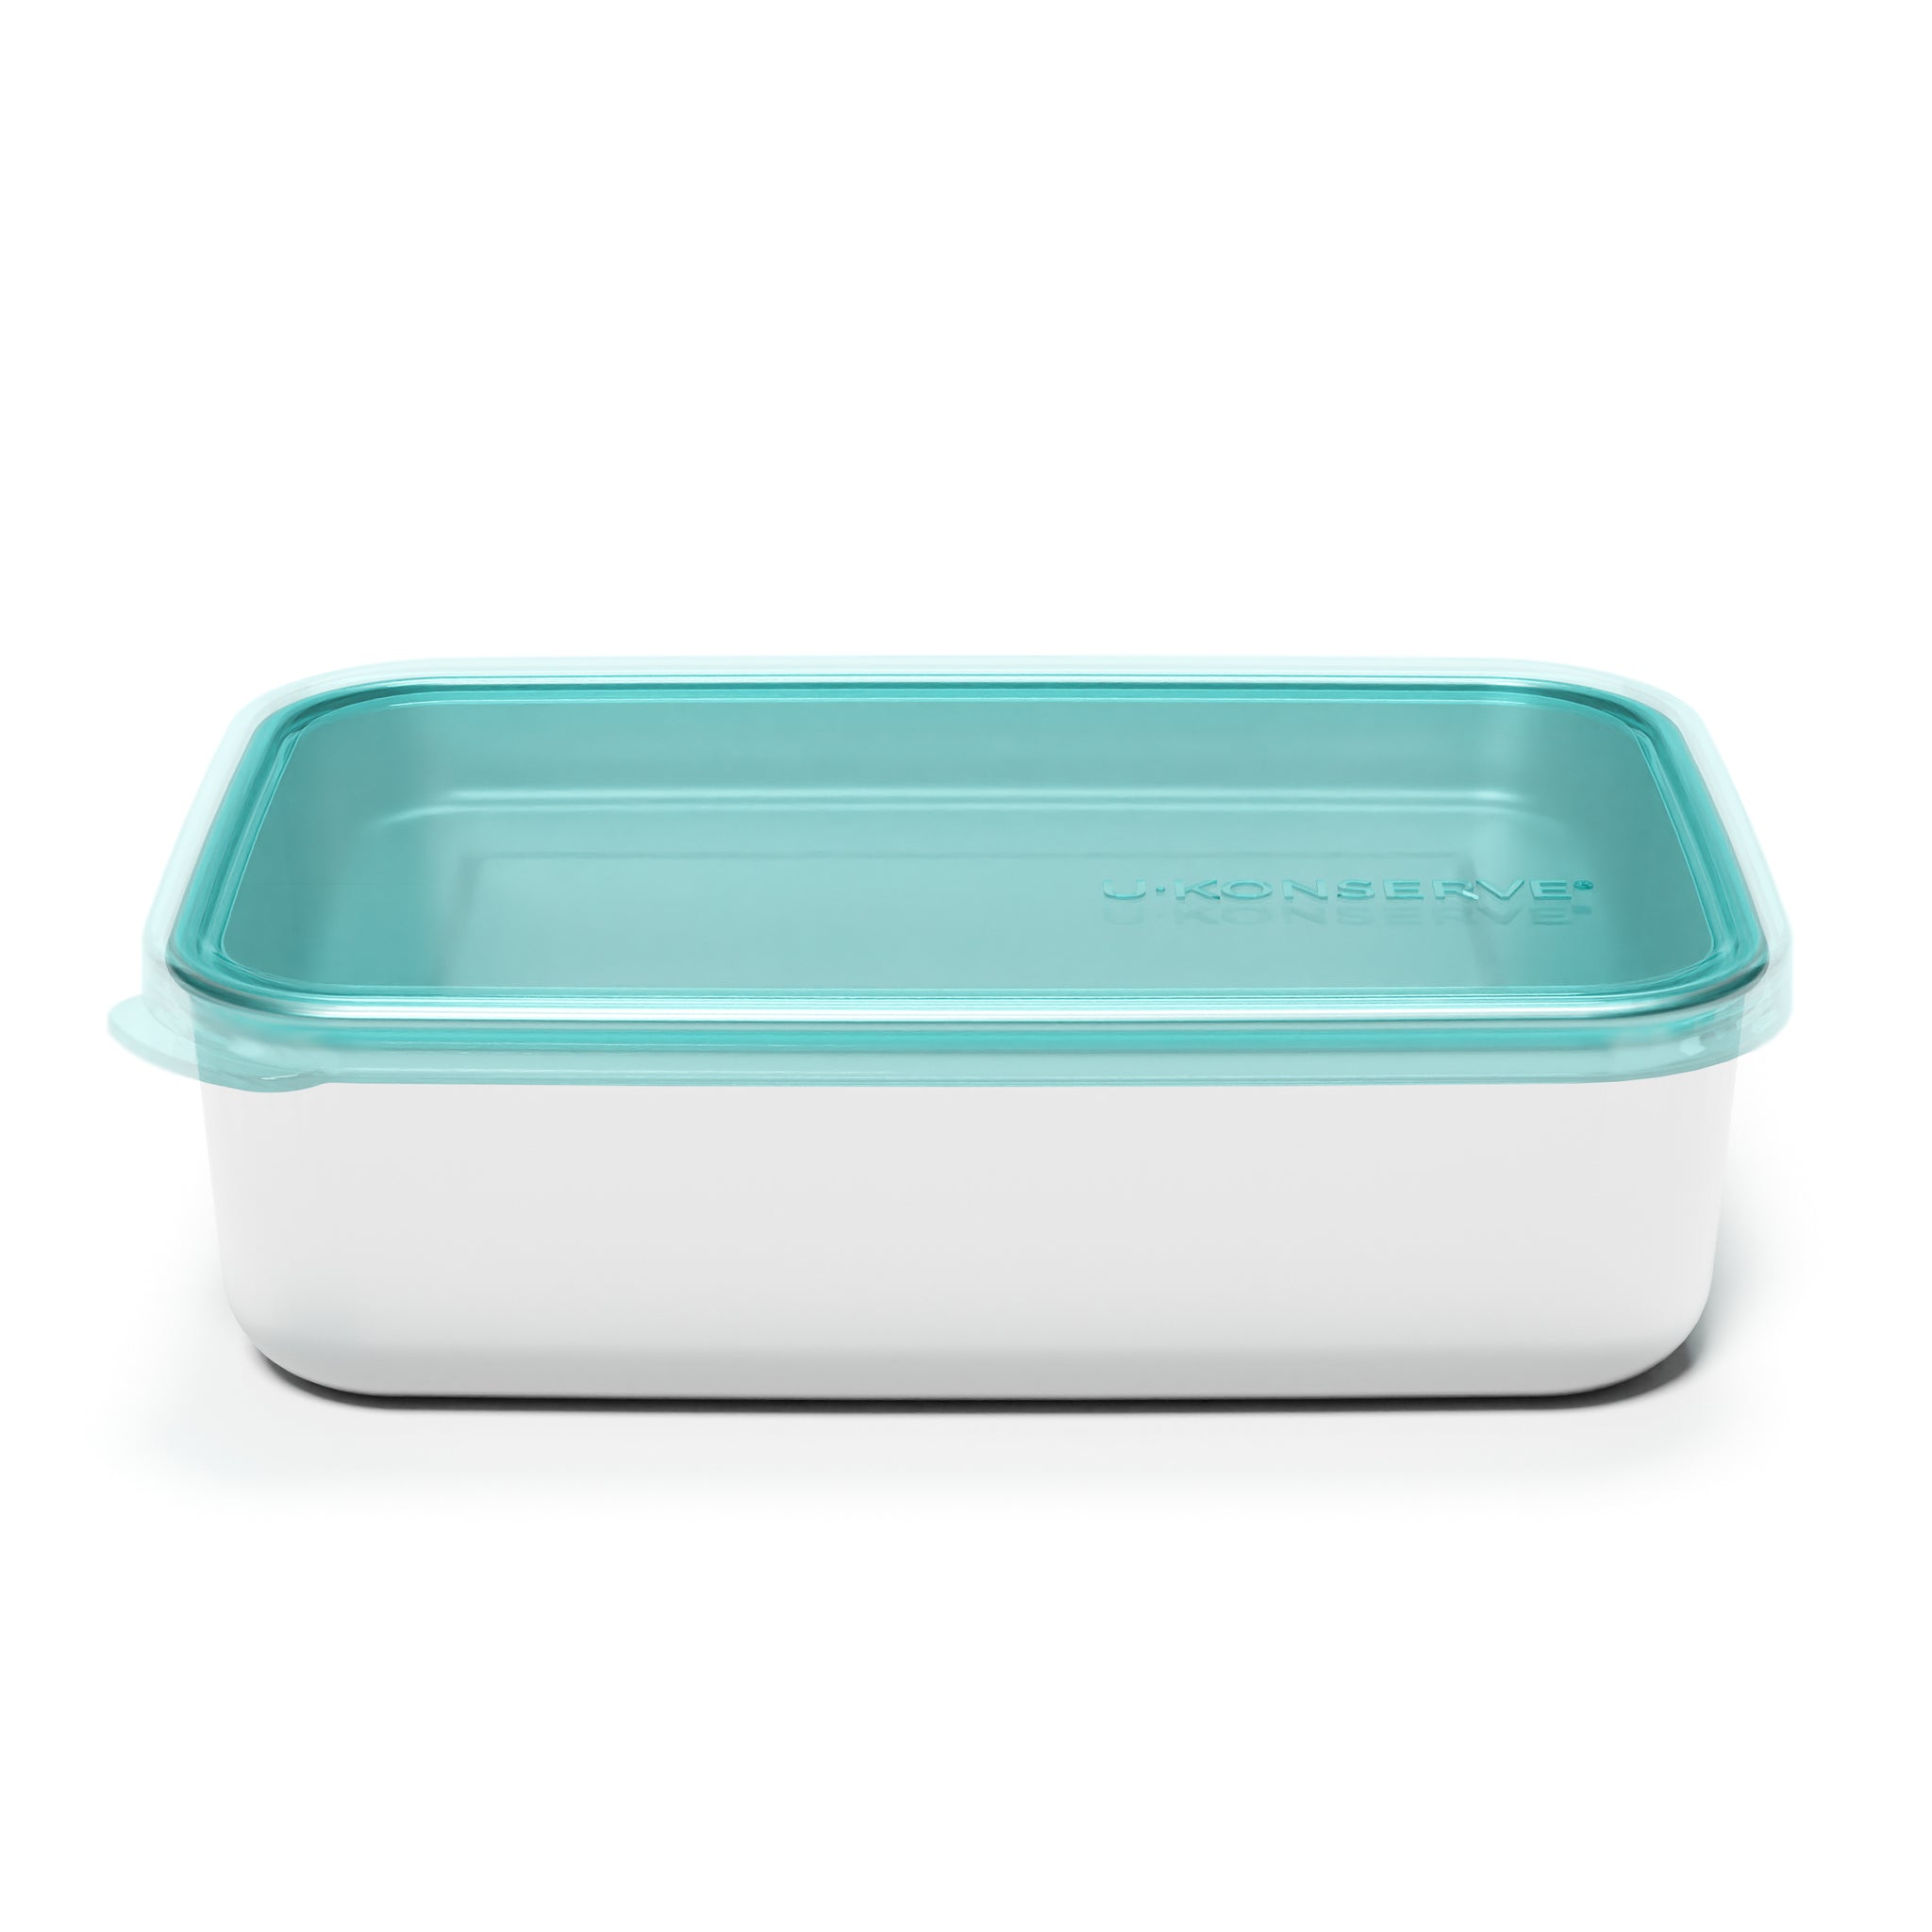 U Konserve Stainless Steel Food Storage Bento Box Container, Leak Proof Silicone Lid Dishwasher Safe - Plastic Free (50oz Blue)